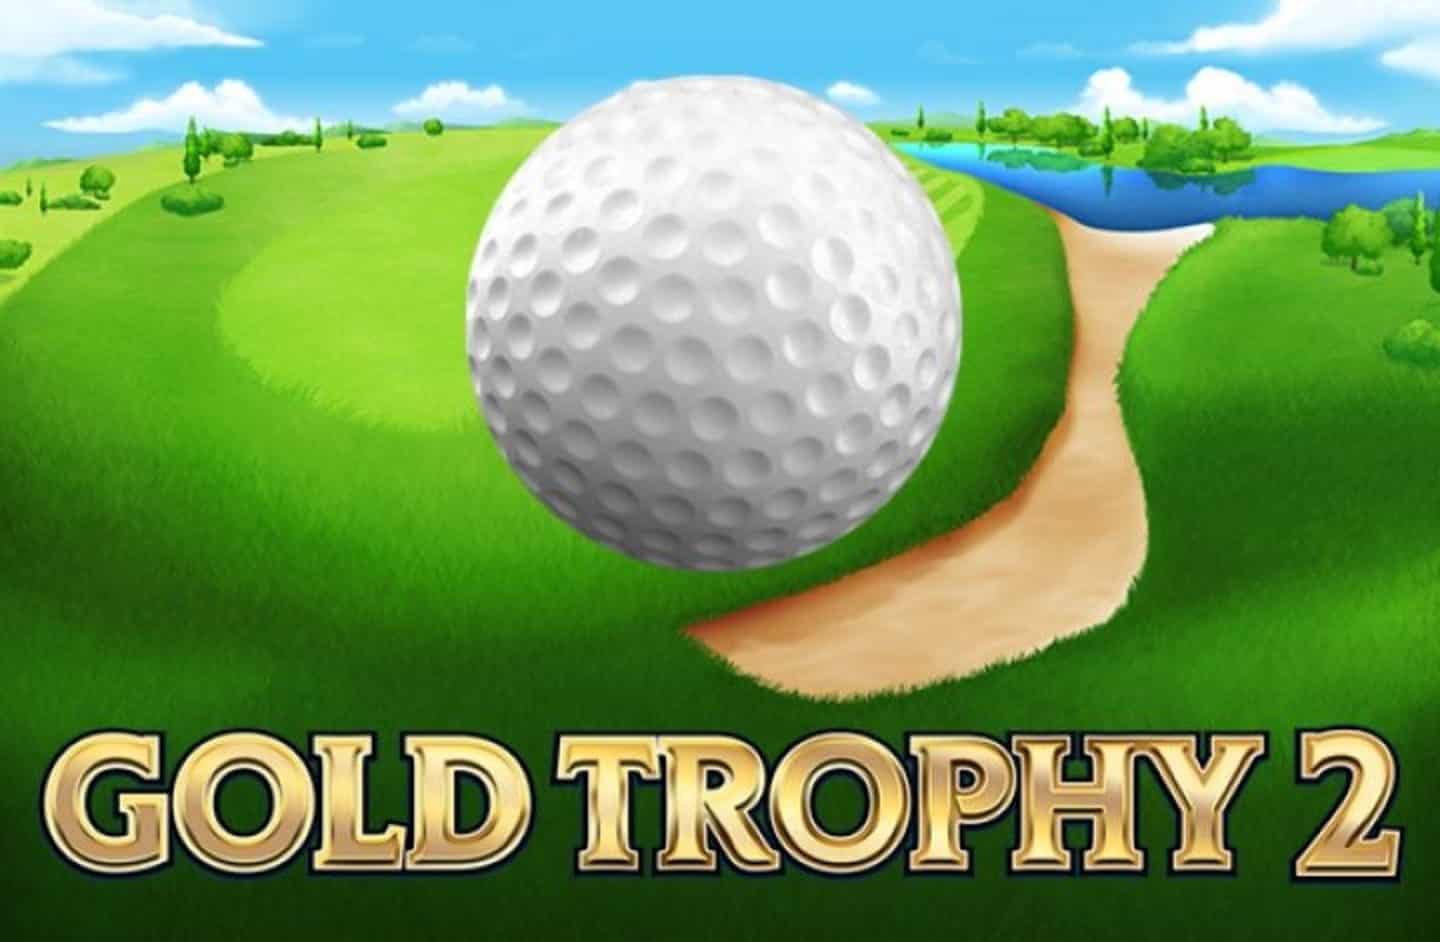 Gold Trophy 2 slot cover image